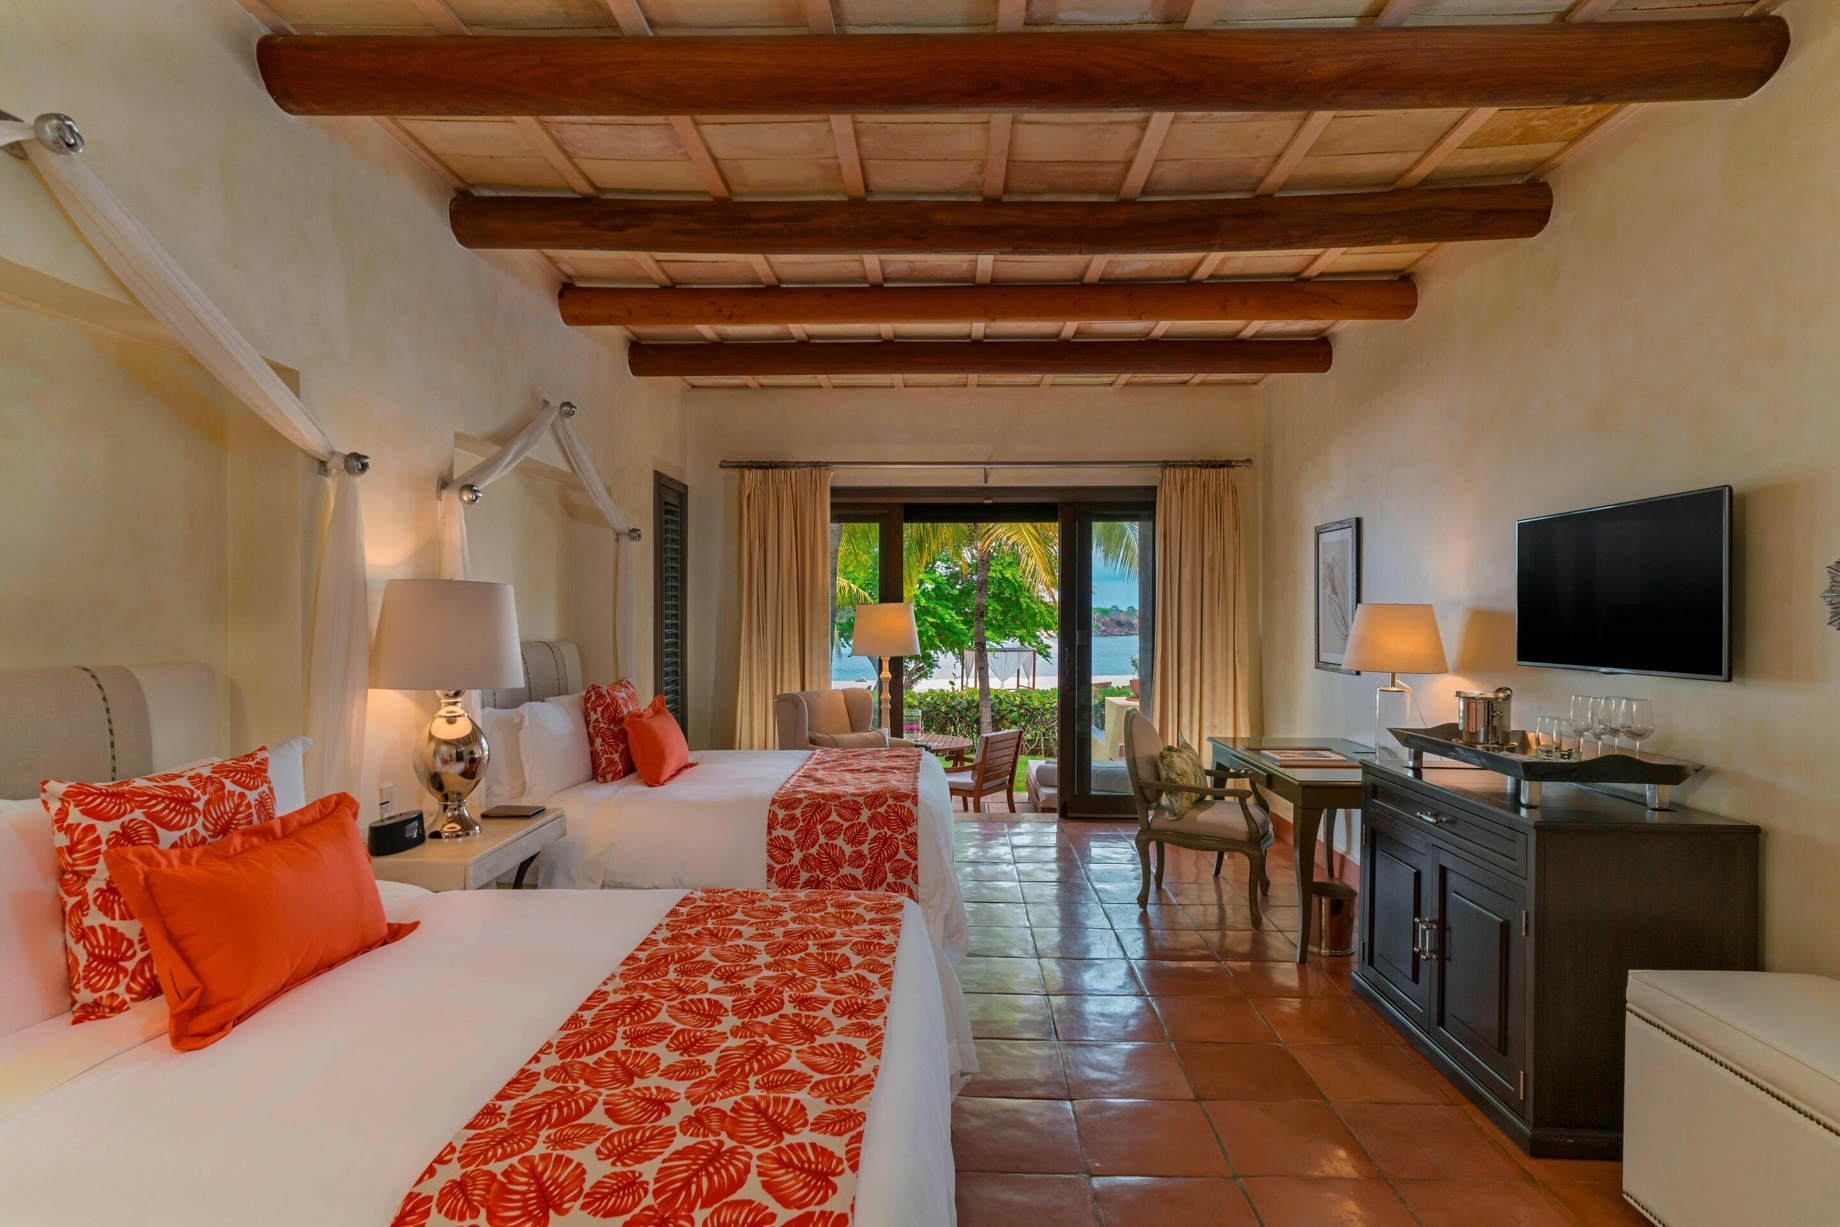 The St. Regis Punta Mita Resort - Nayarit, Mexico - 2 Queen Bed Beachfront View Deluxe Guest Room